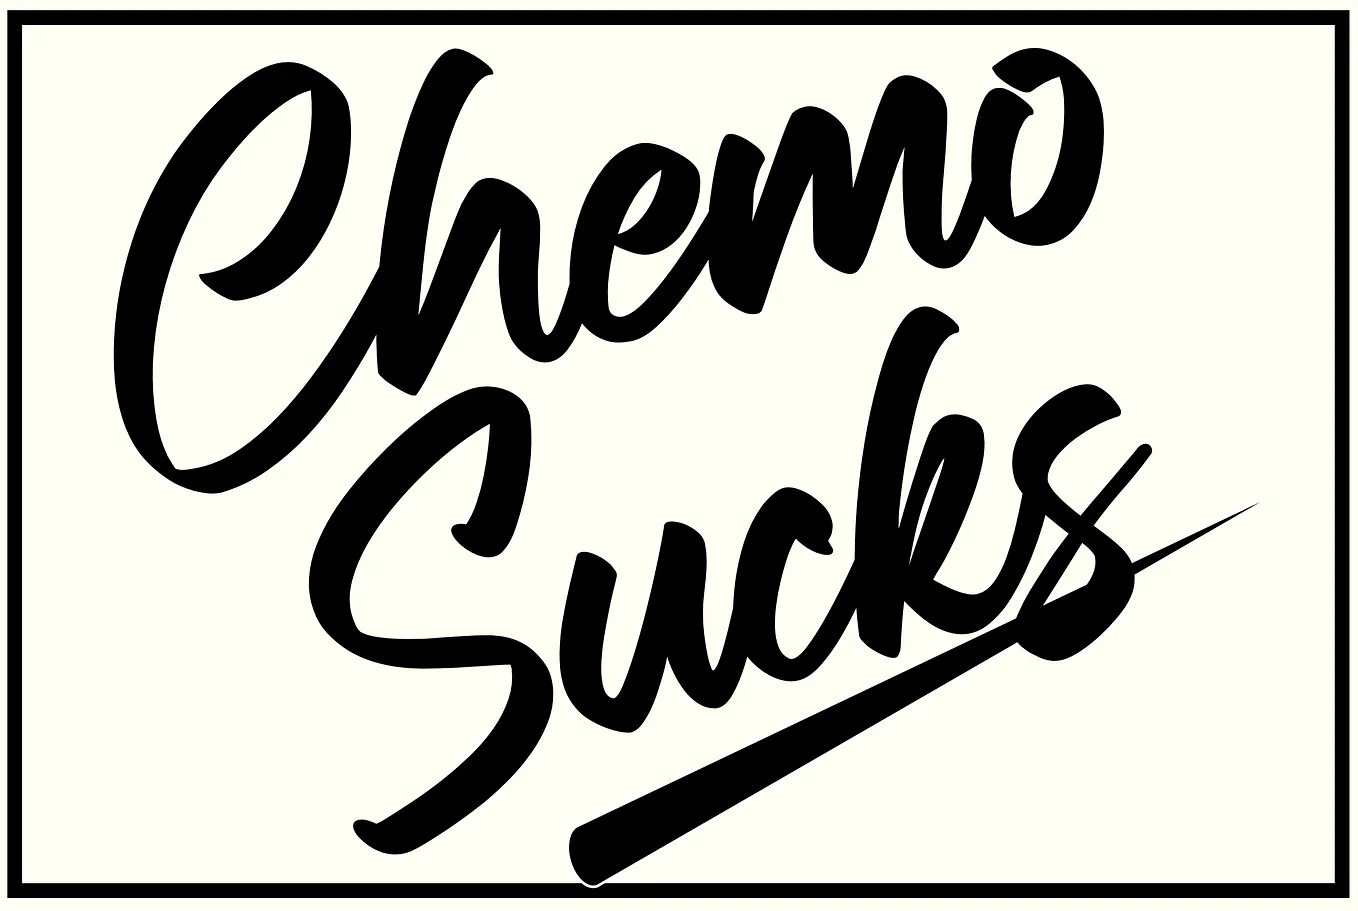 Chemo Sucks.